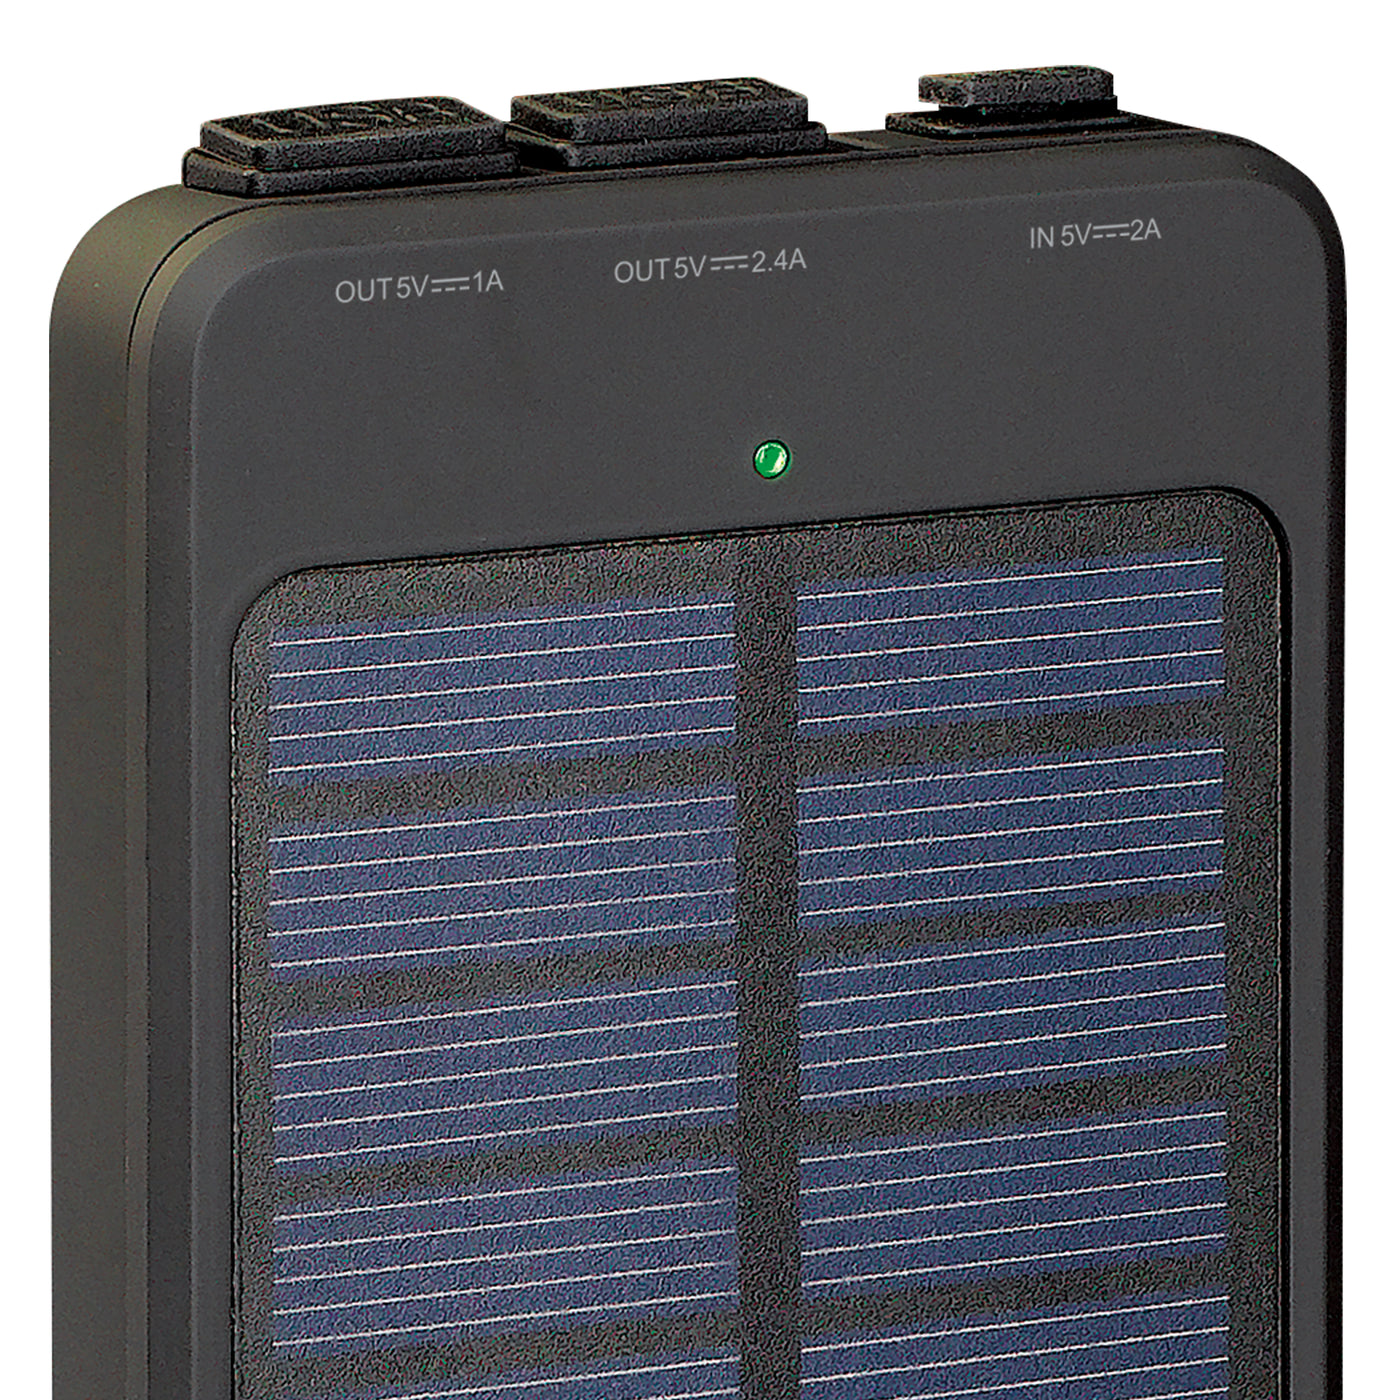 LENCO PBS-620 - Powerbank with 6000mAh IPX4 solar cells - Black